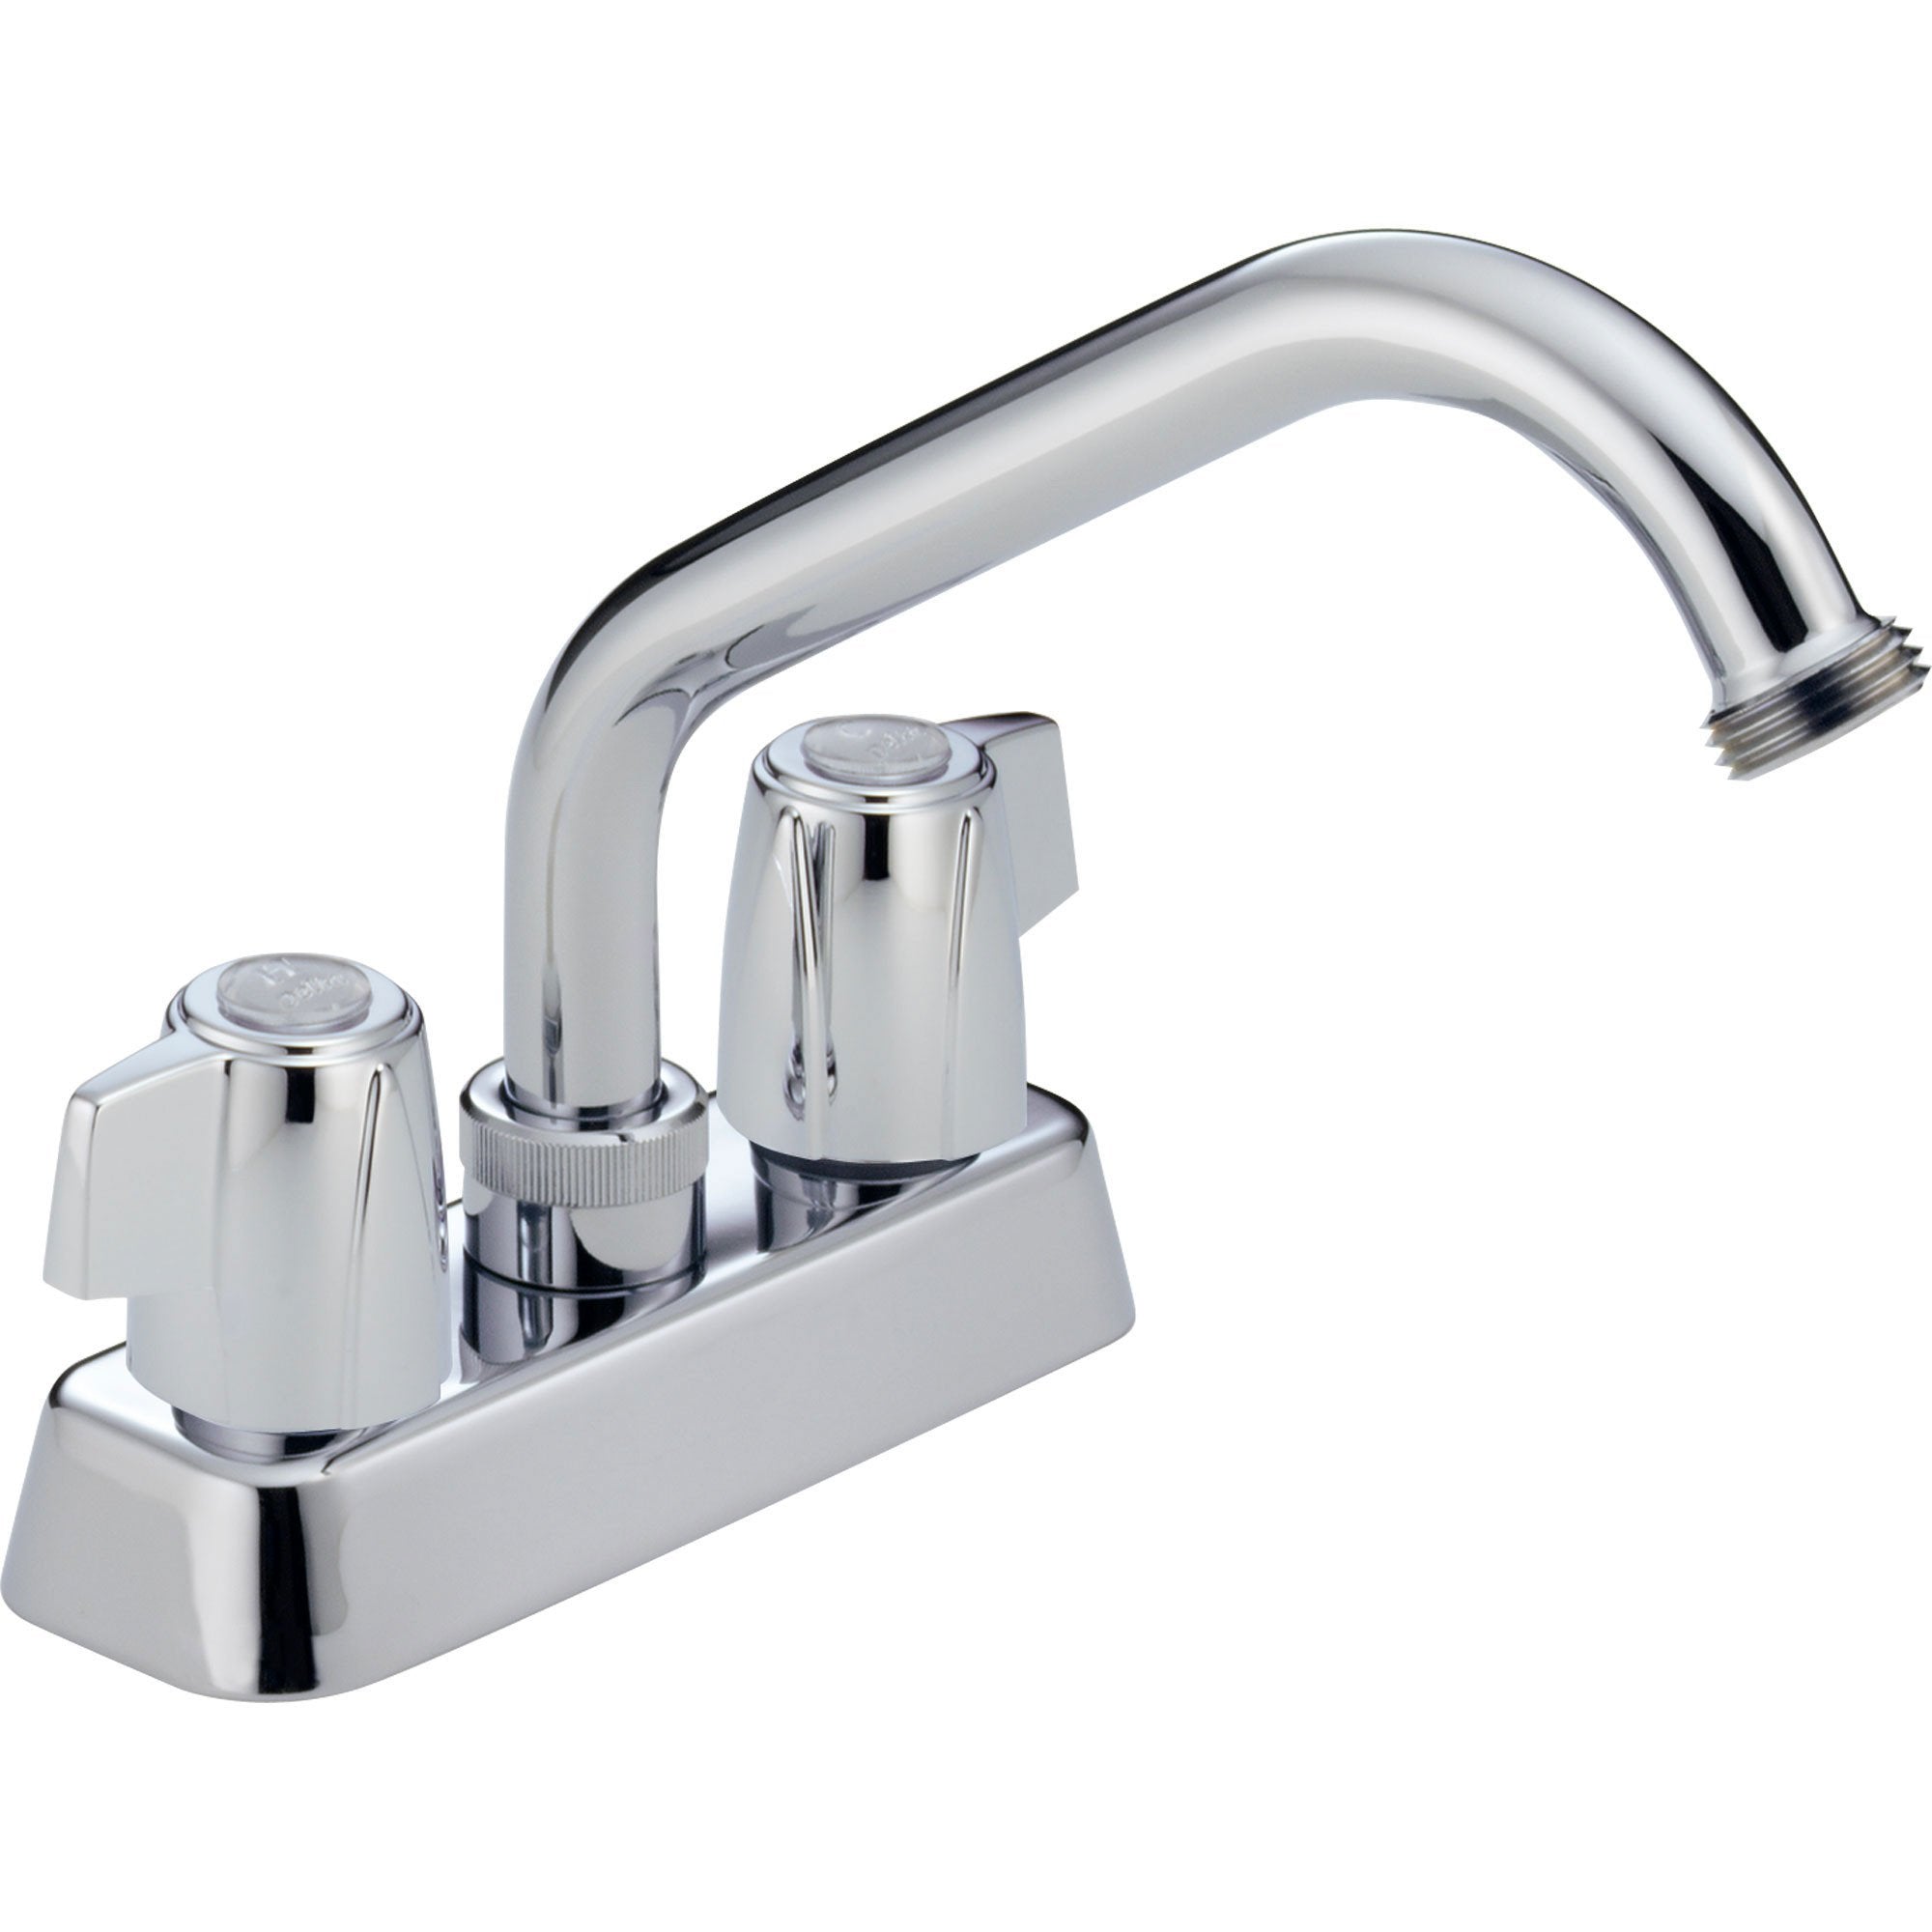 Delta Chrome Finish Two Handle Centerset Laundry Sink Faucet572902